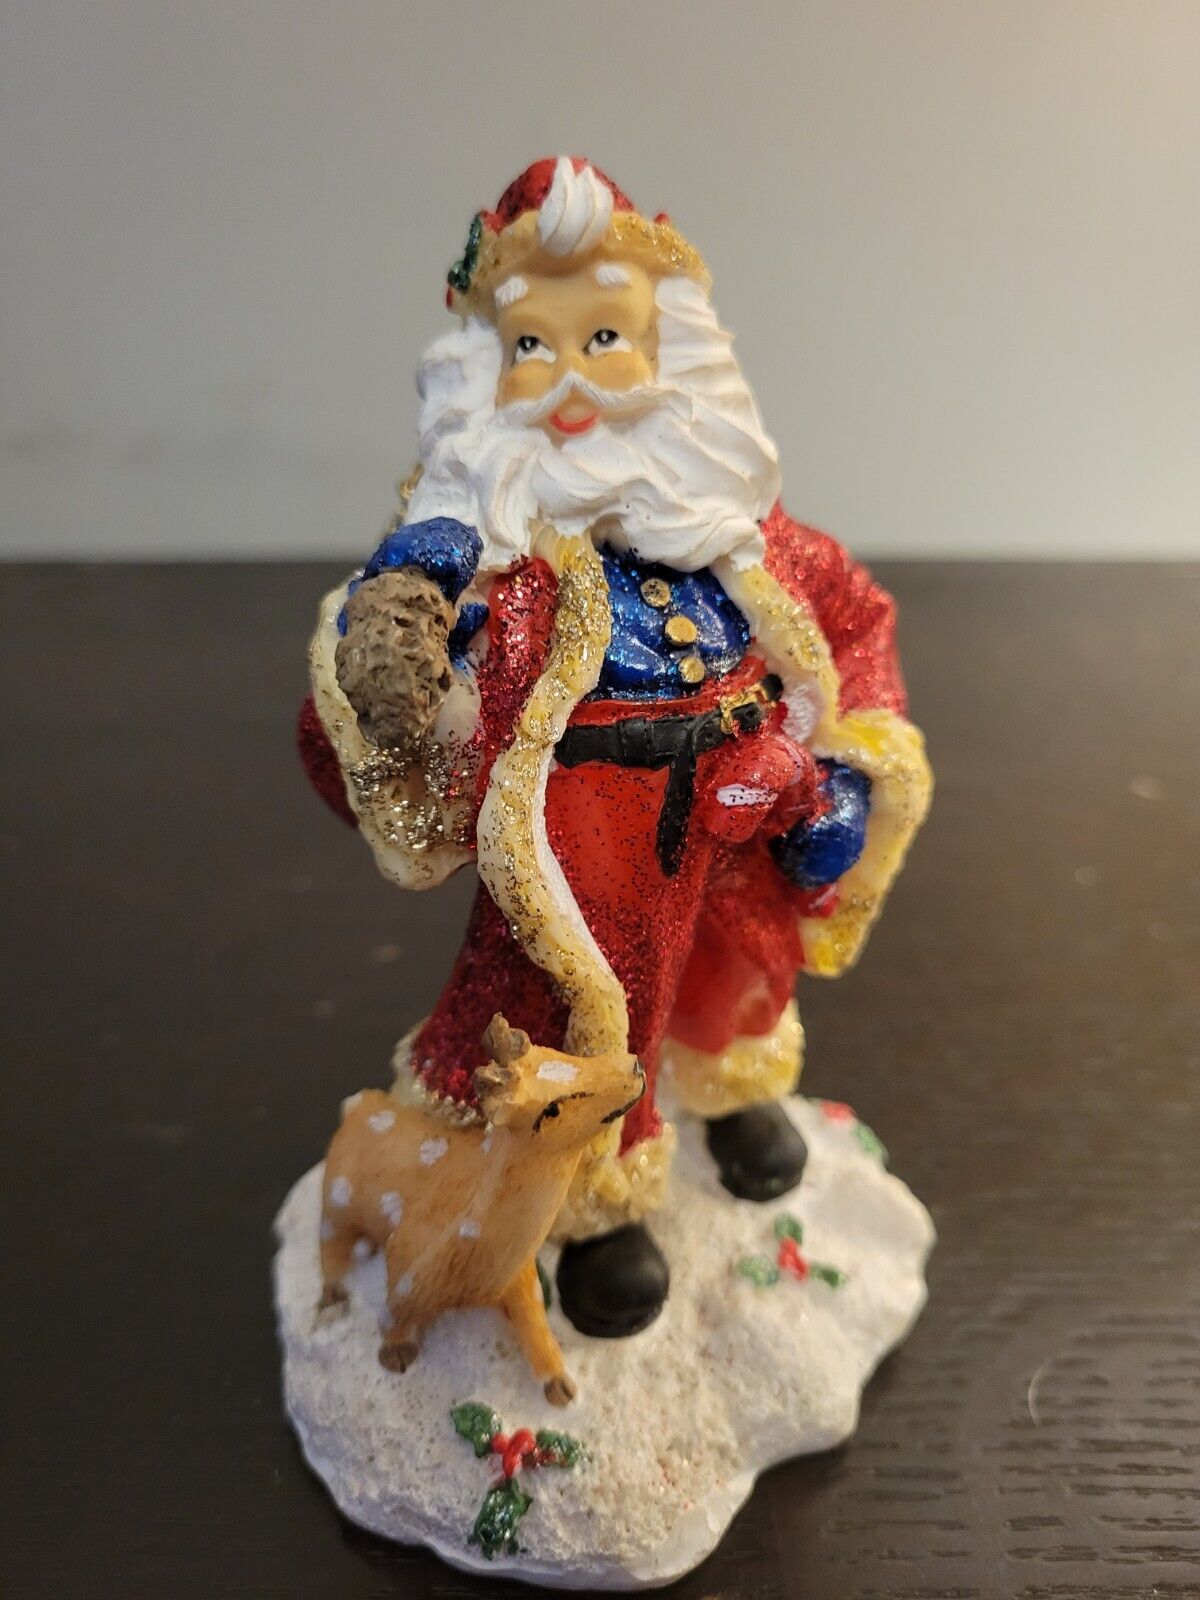 Vintage Santa Claus Figurine with Toy Sack Glittery Christmas Decoration